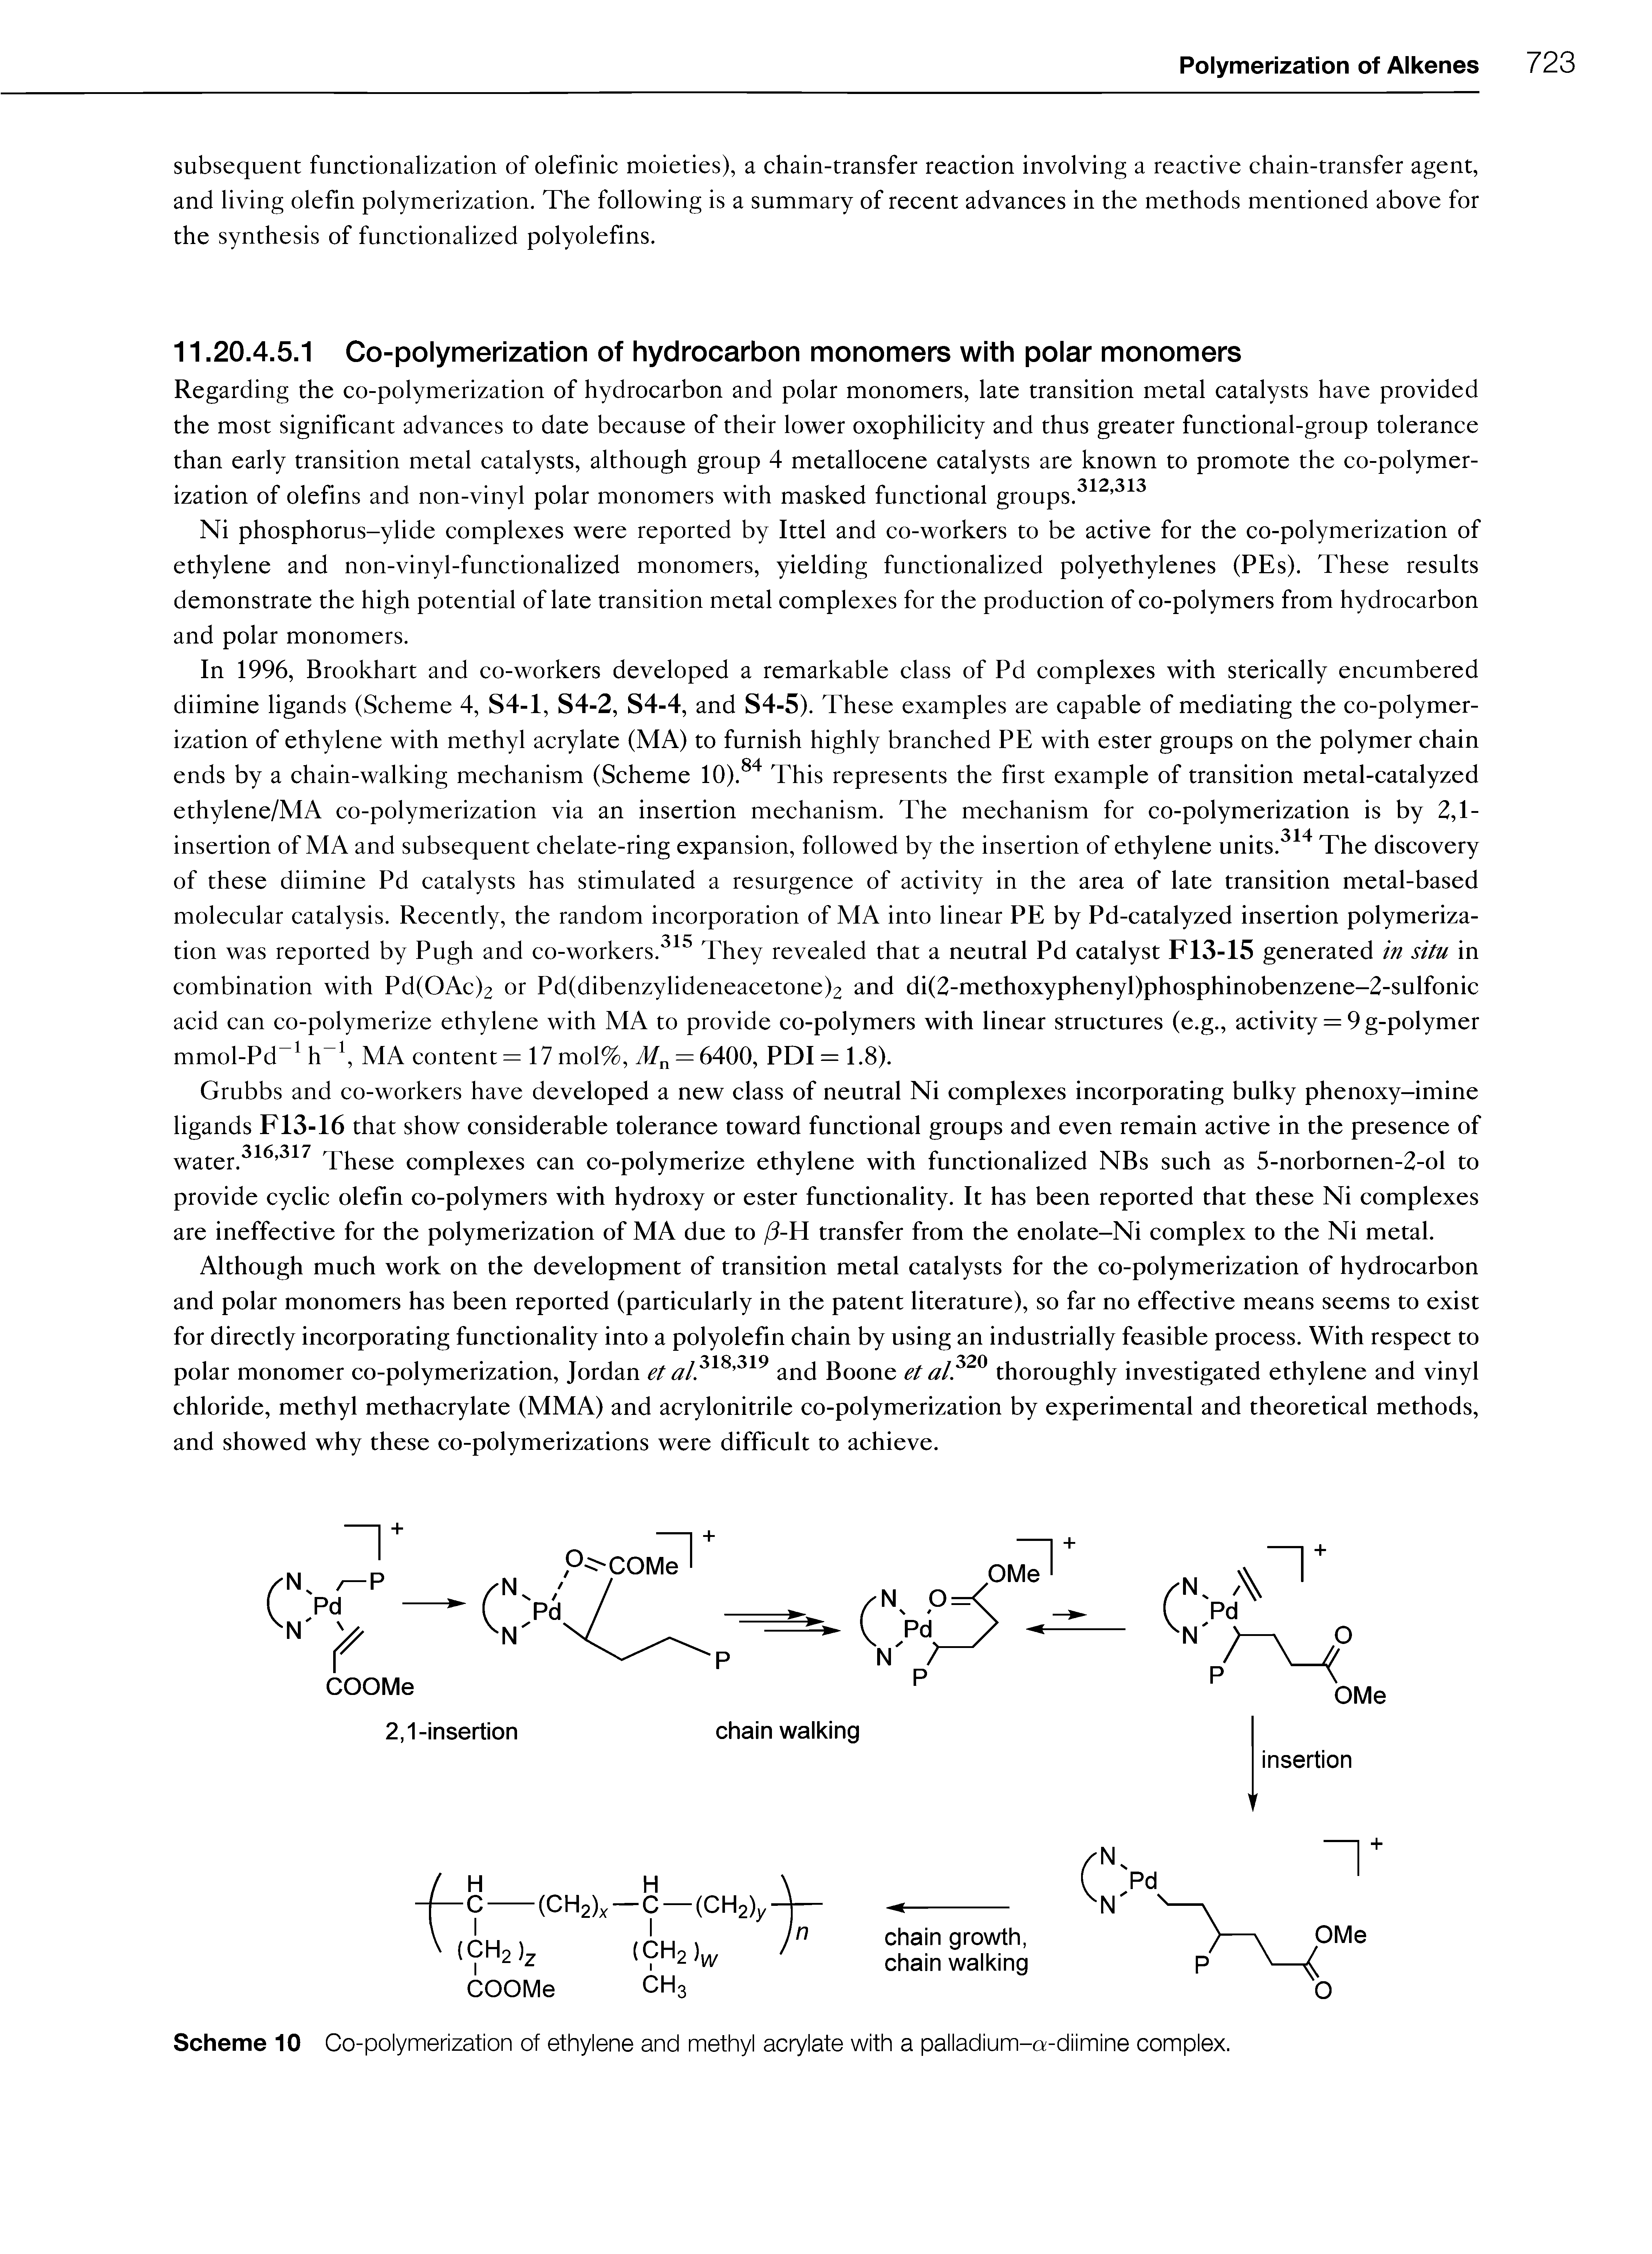 Scheme 10 Co-polymerization of ethylene and methyl aorylate with a palladium-o-diimine oomplex.